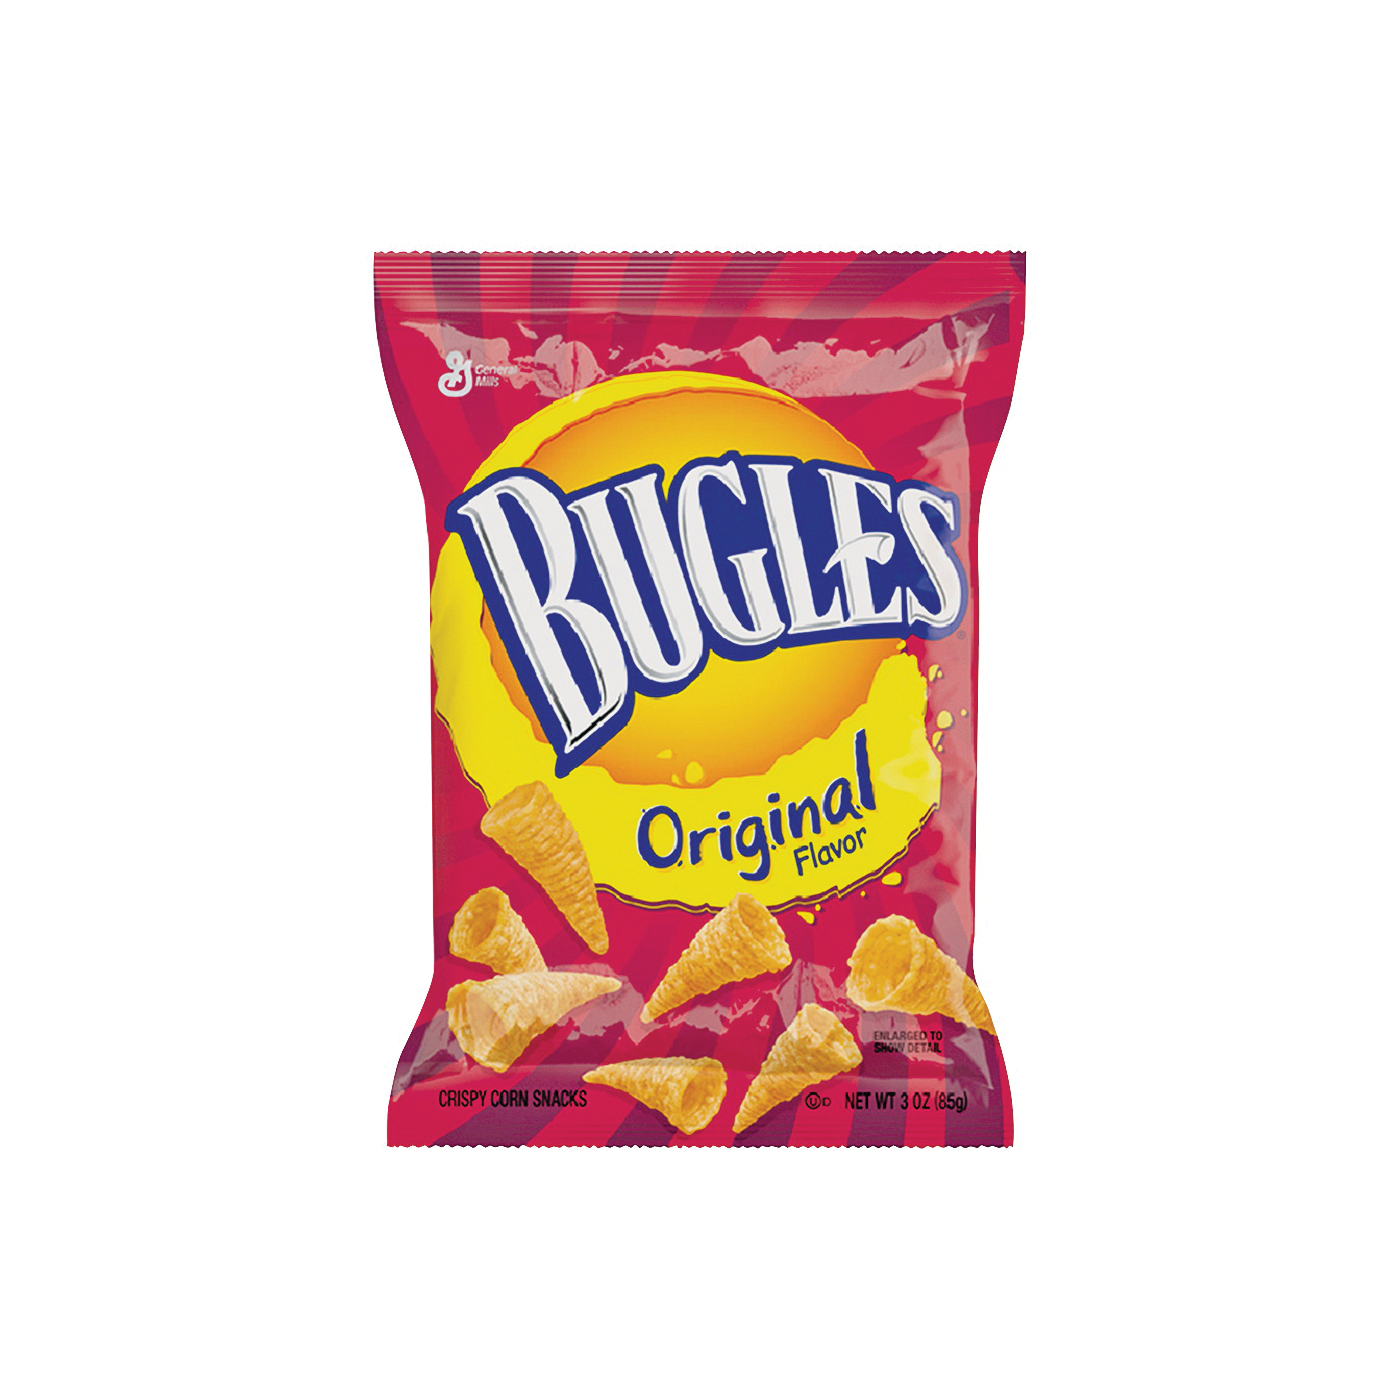 Buy Bugles BUGLES6 Corn Snack, Original Flavor, 3 oz (Pack of 6)